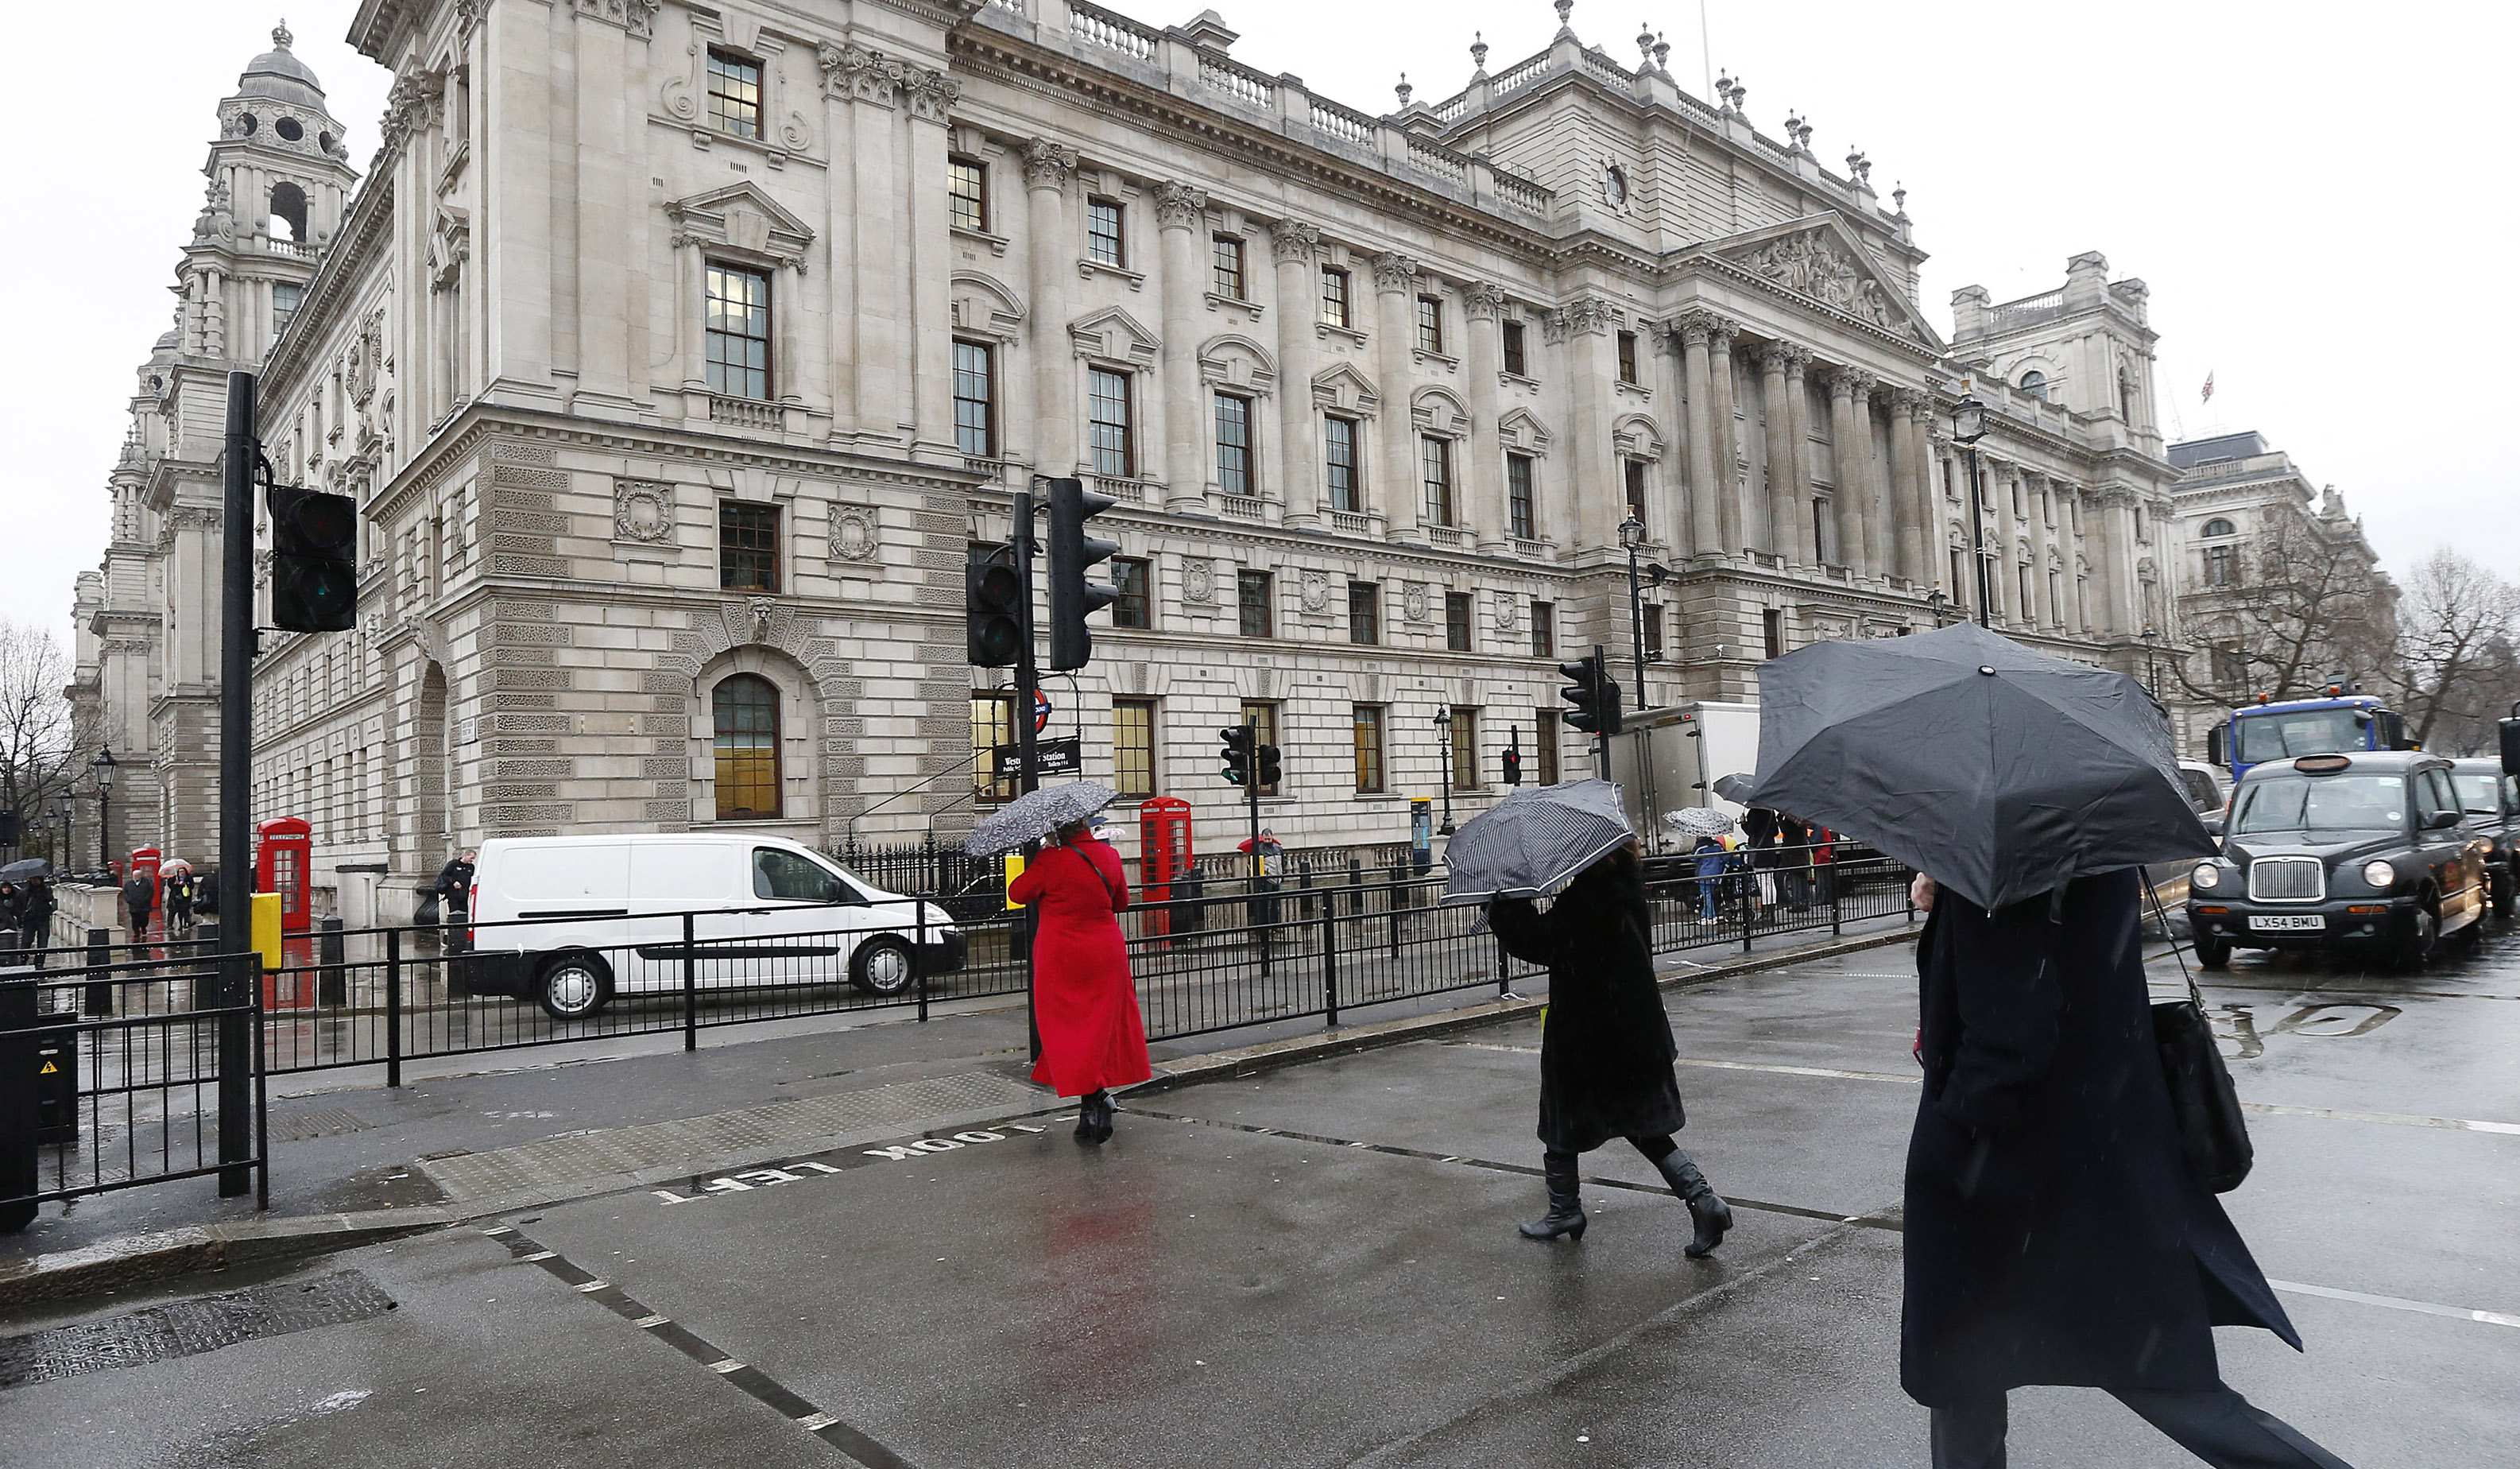 Pedestrians walk past the HM Revenue & Customs building in Whitehall, central London